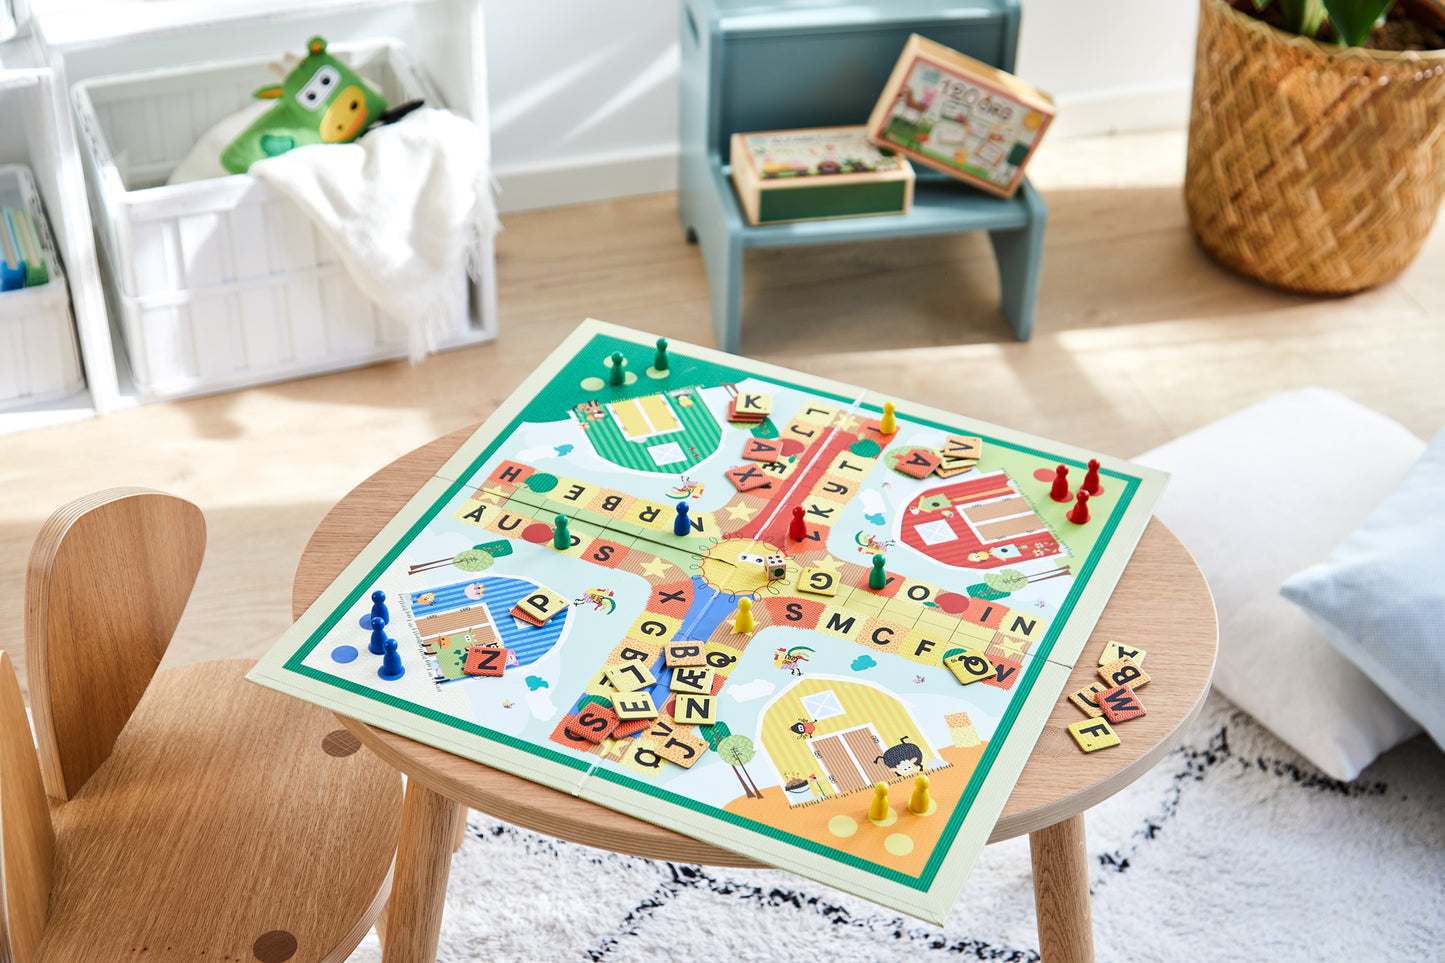 alfabet ludo board game in a kids bedroom